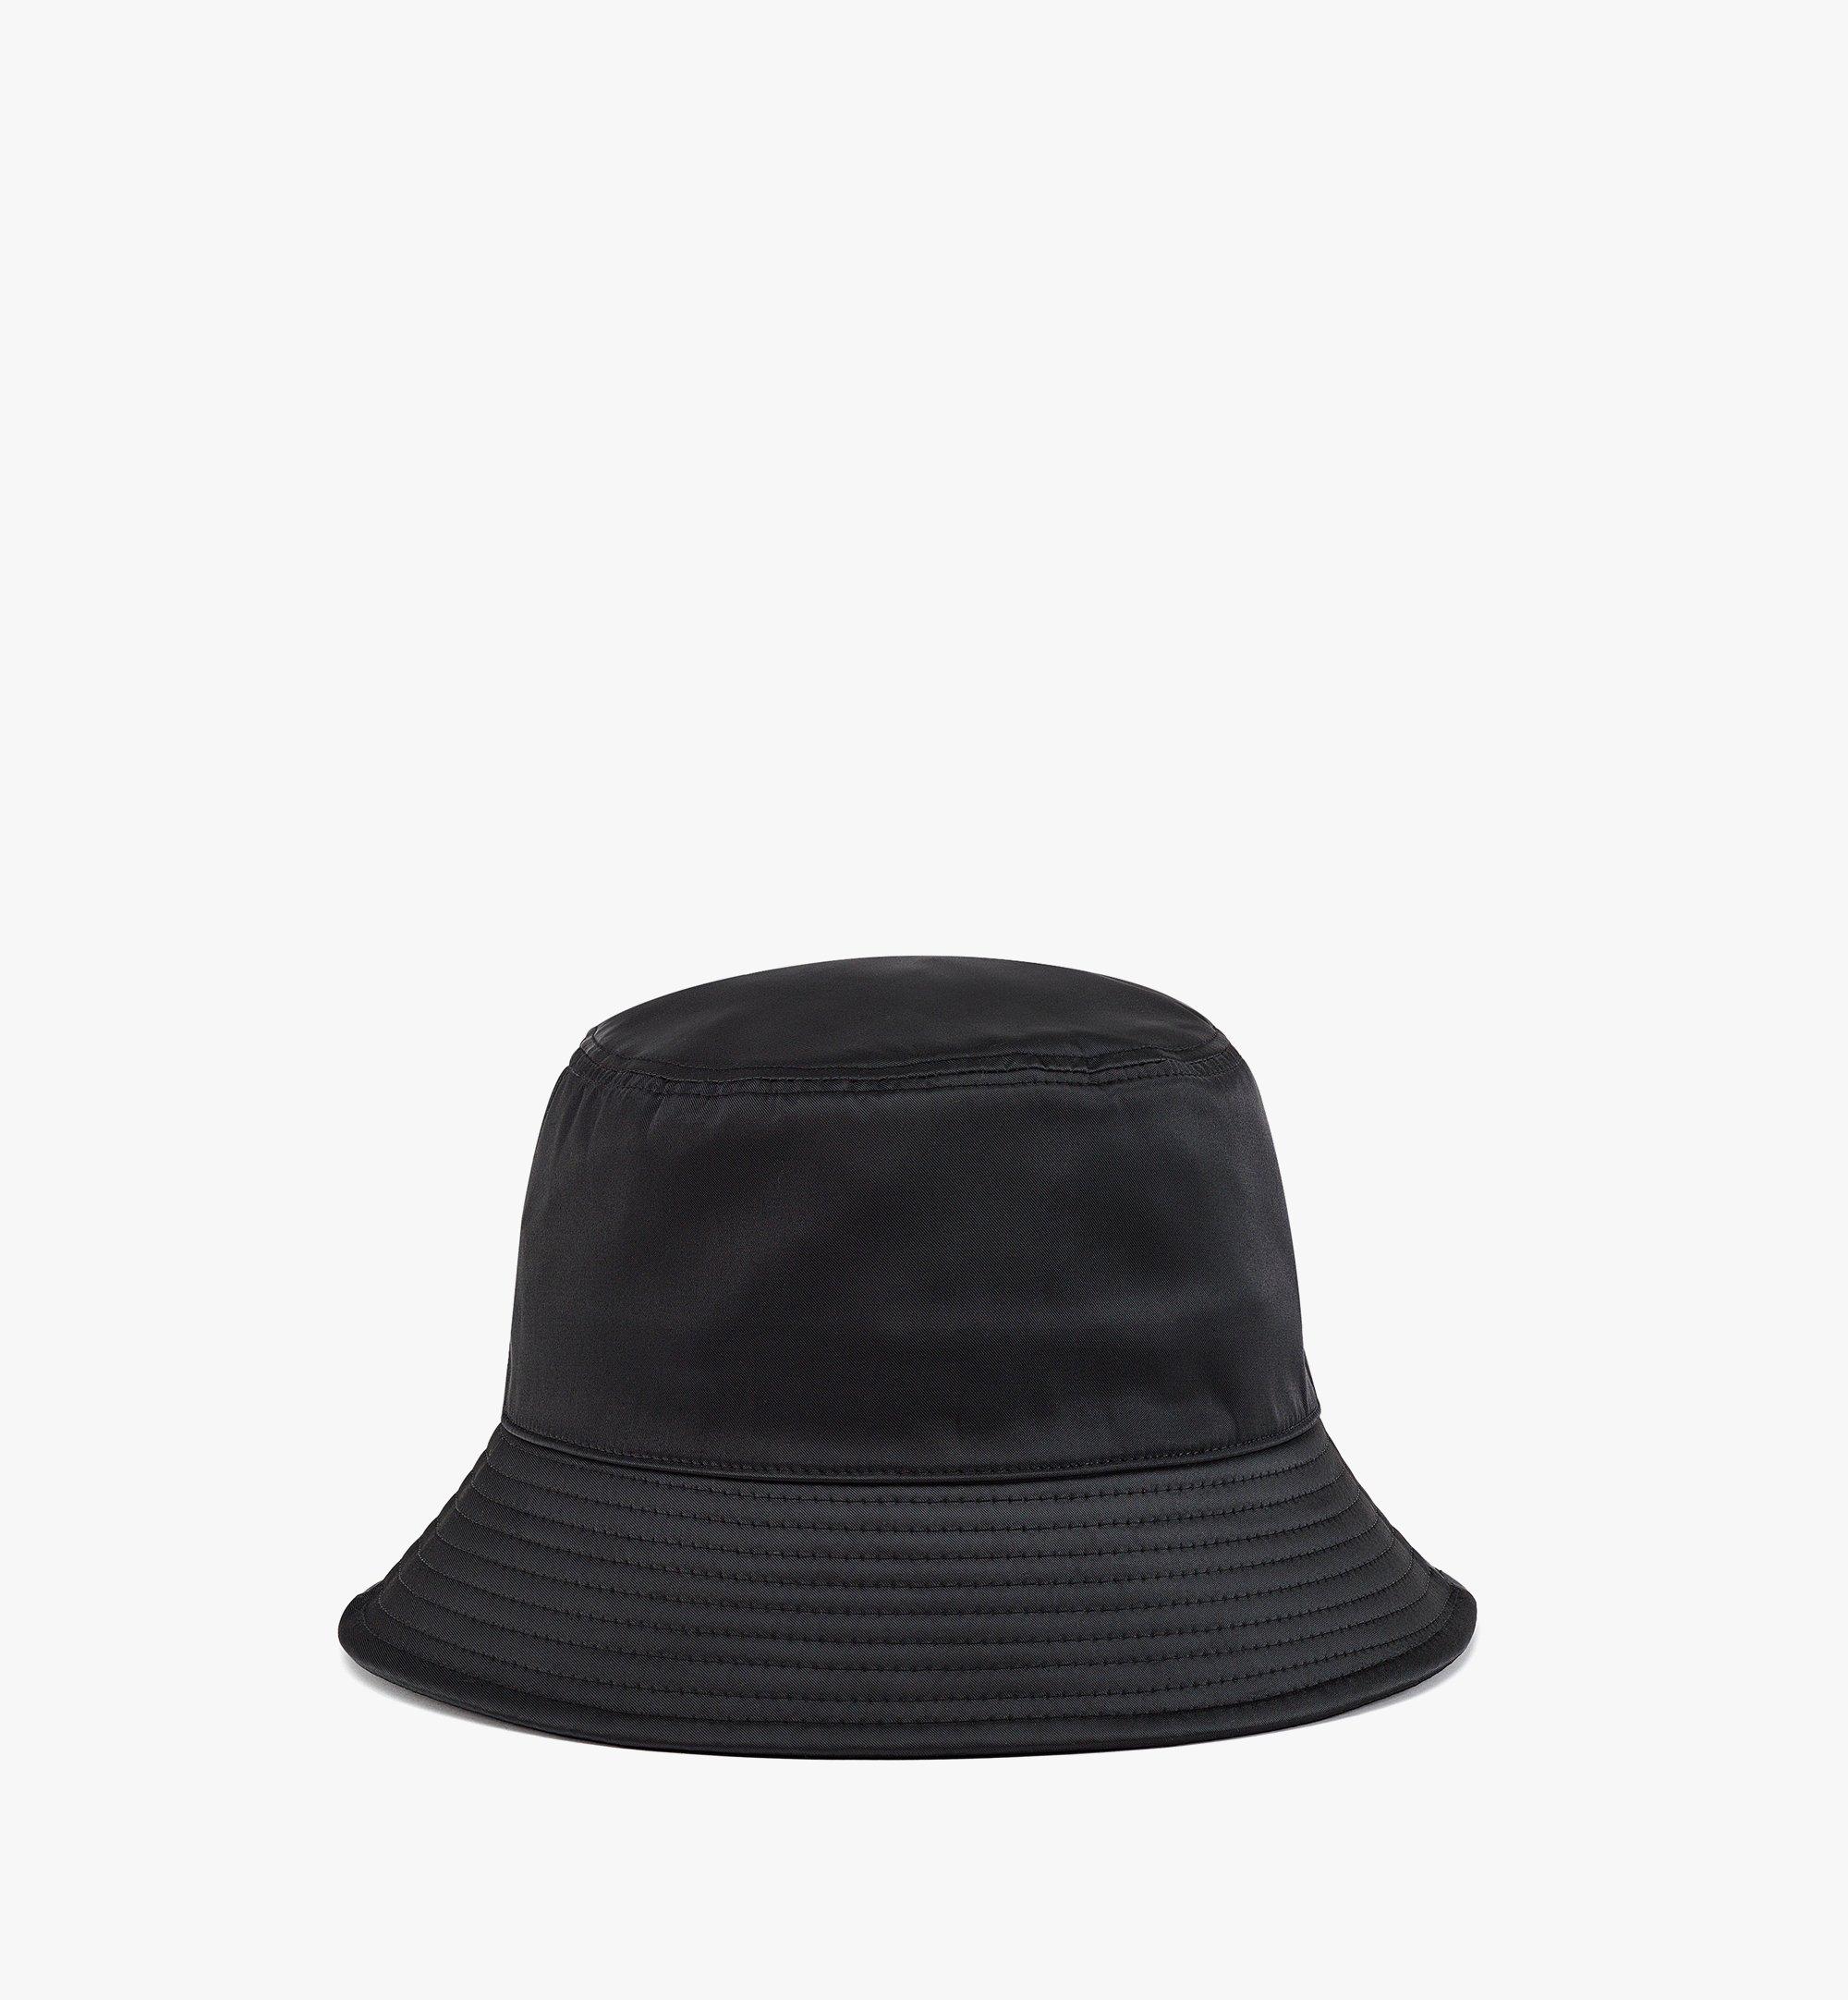 MCM Logo Embroidery Bucket Hat in Nylon Twill Black MEHDAMM04BK001 Alternate View 1